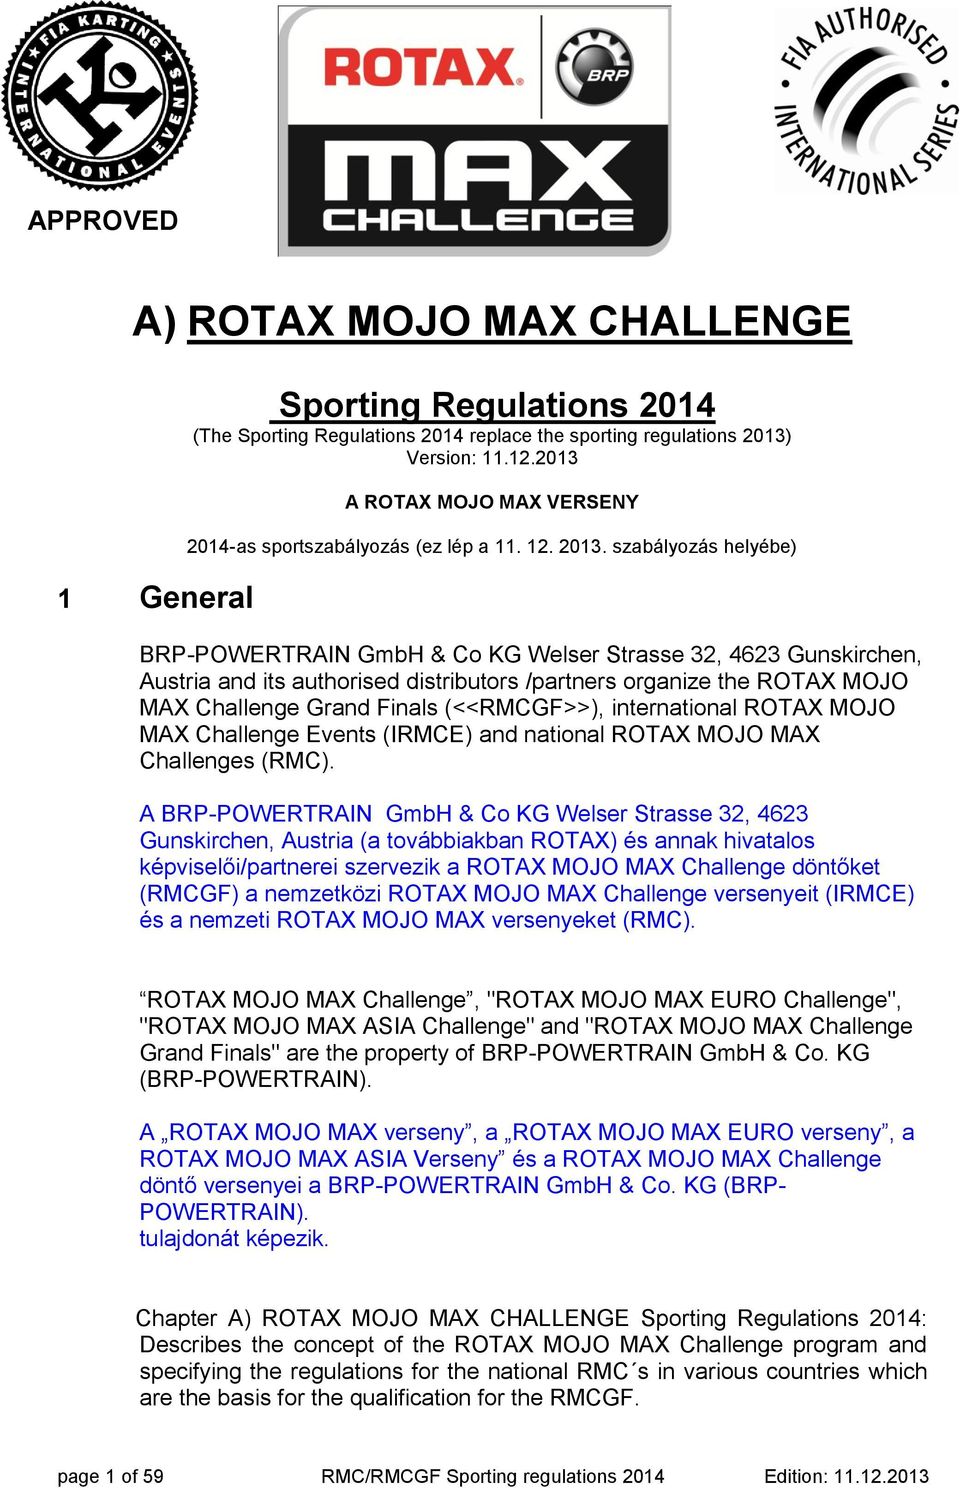 szabályozás helyébe) BRP-POWERTRAIN GmbH & Co KG Welser Strasse 32, 4623 Gunskirchen, Austria and its authorised distributors /partners organize the ROTAX MOJO MAX Challenge Grand Finals (<<RMCGF>>),